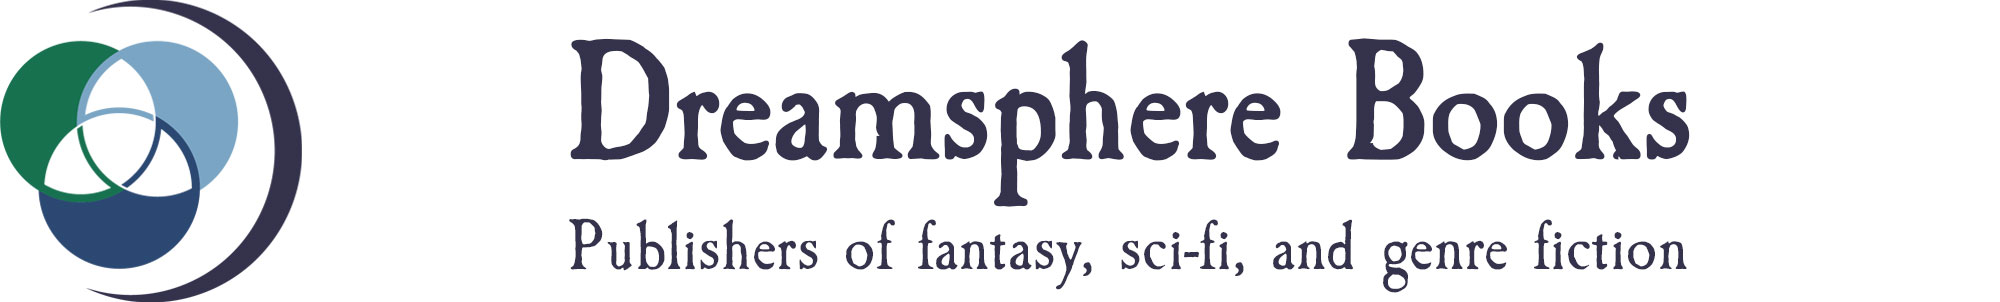 Dreamsphere Books